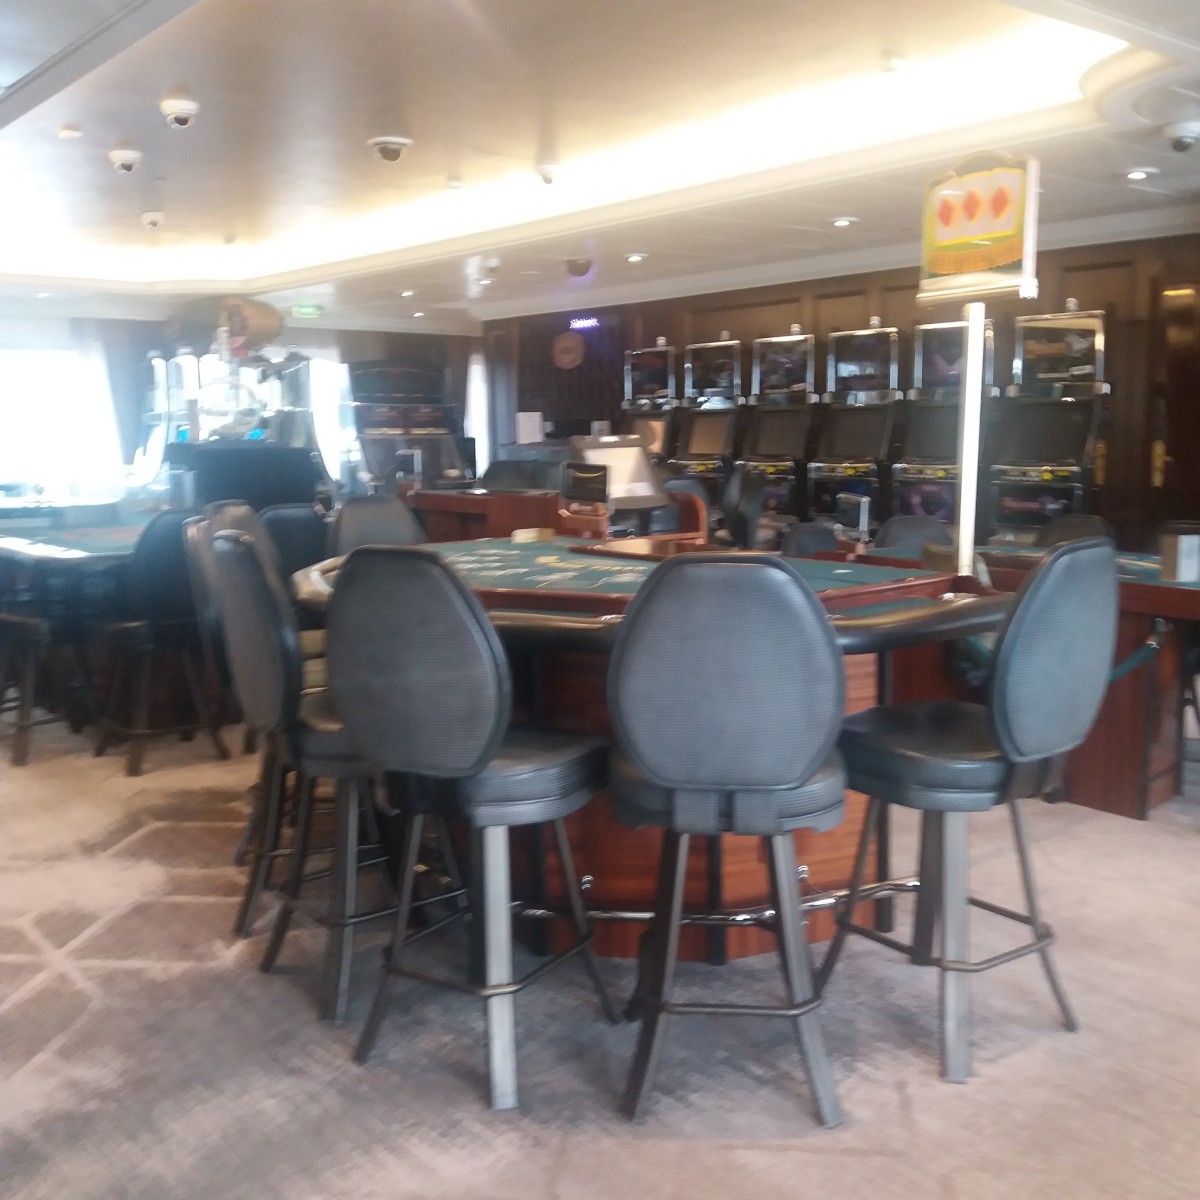 Poker Area of a Cruise Ship